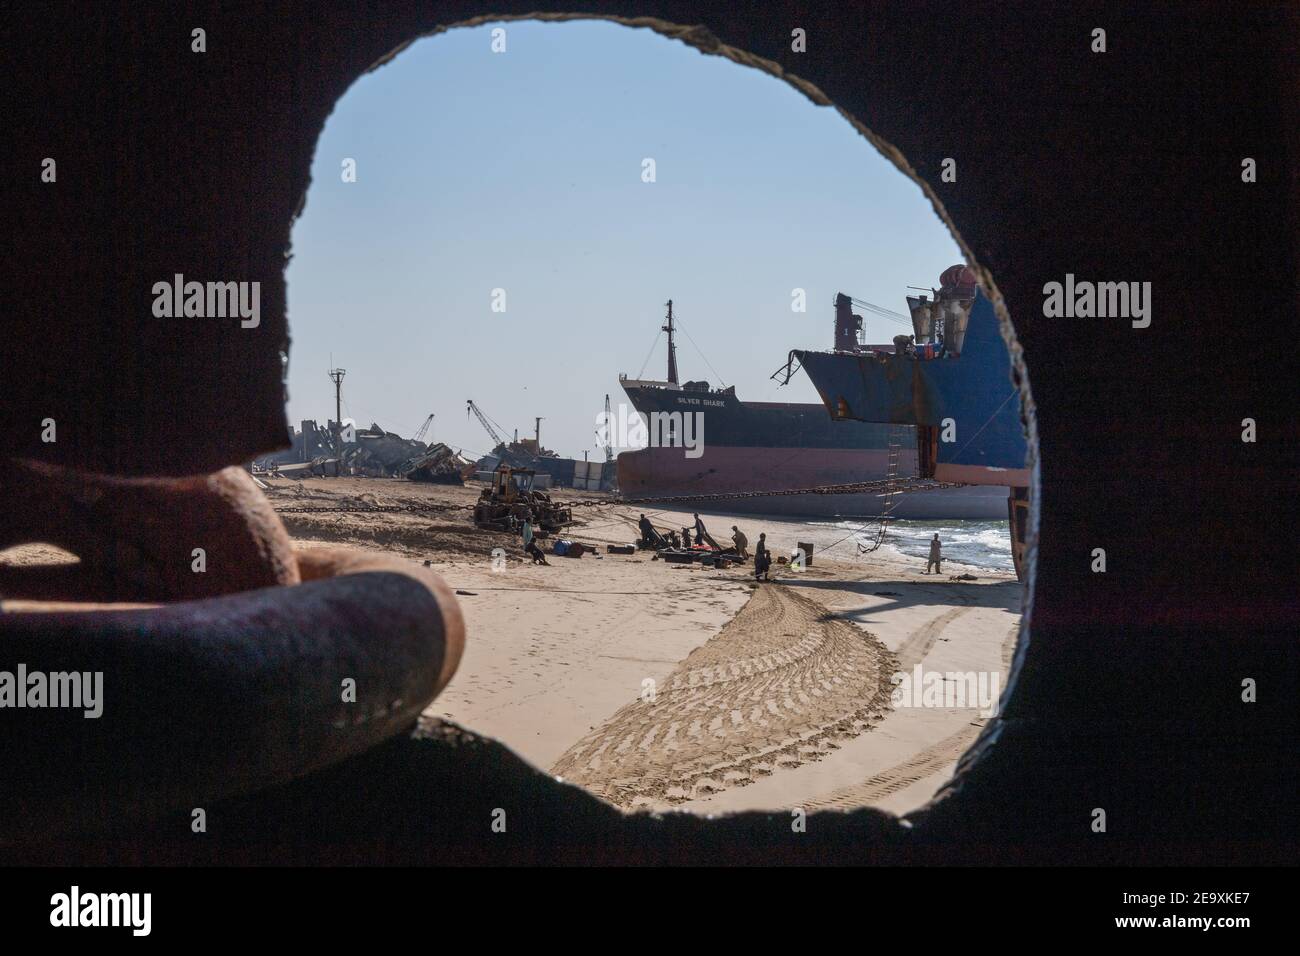 Ships to be broken up at Gadani ship-breaking yard, located across a 10 km long beachfront, Balochistan, Pakistan. Stock Photo